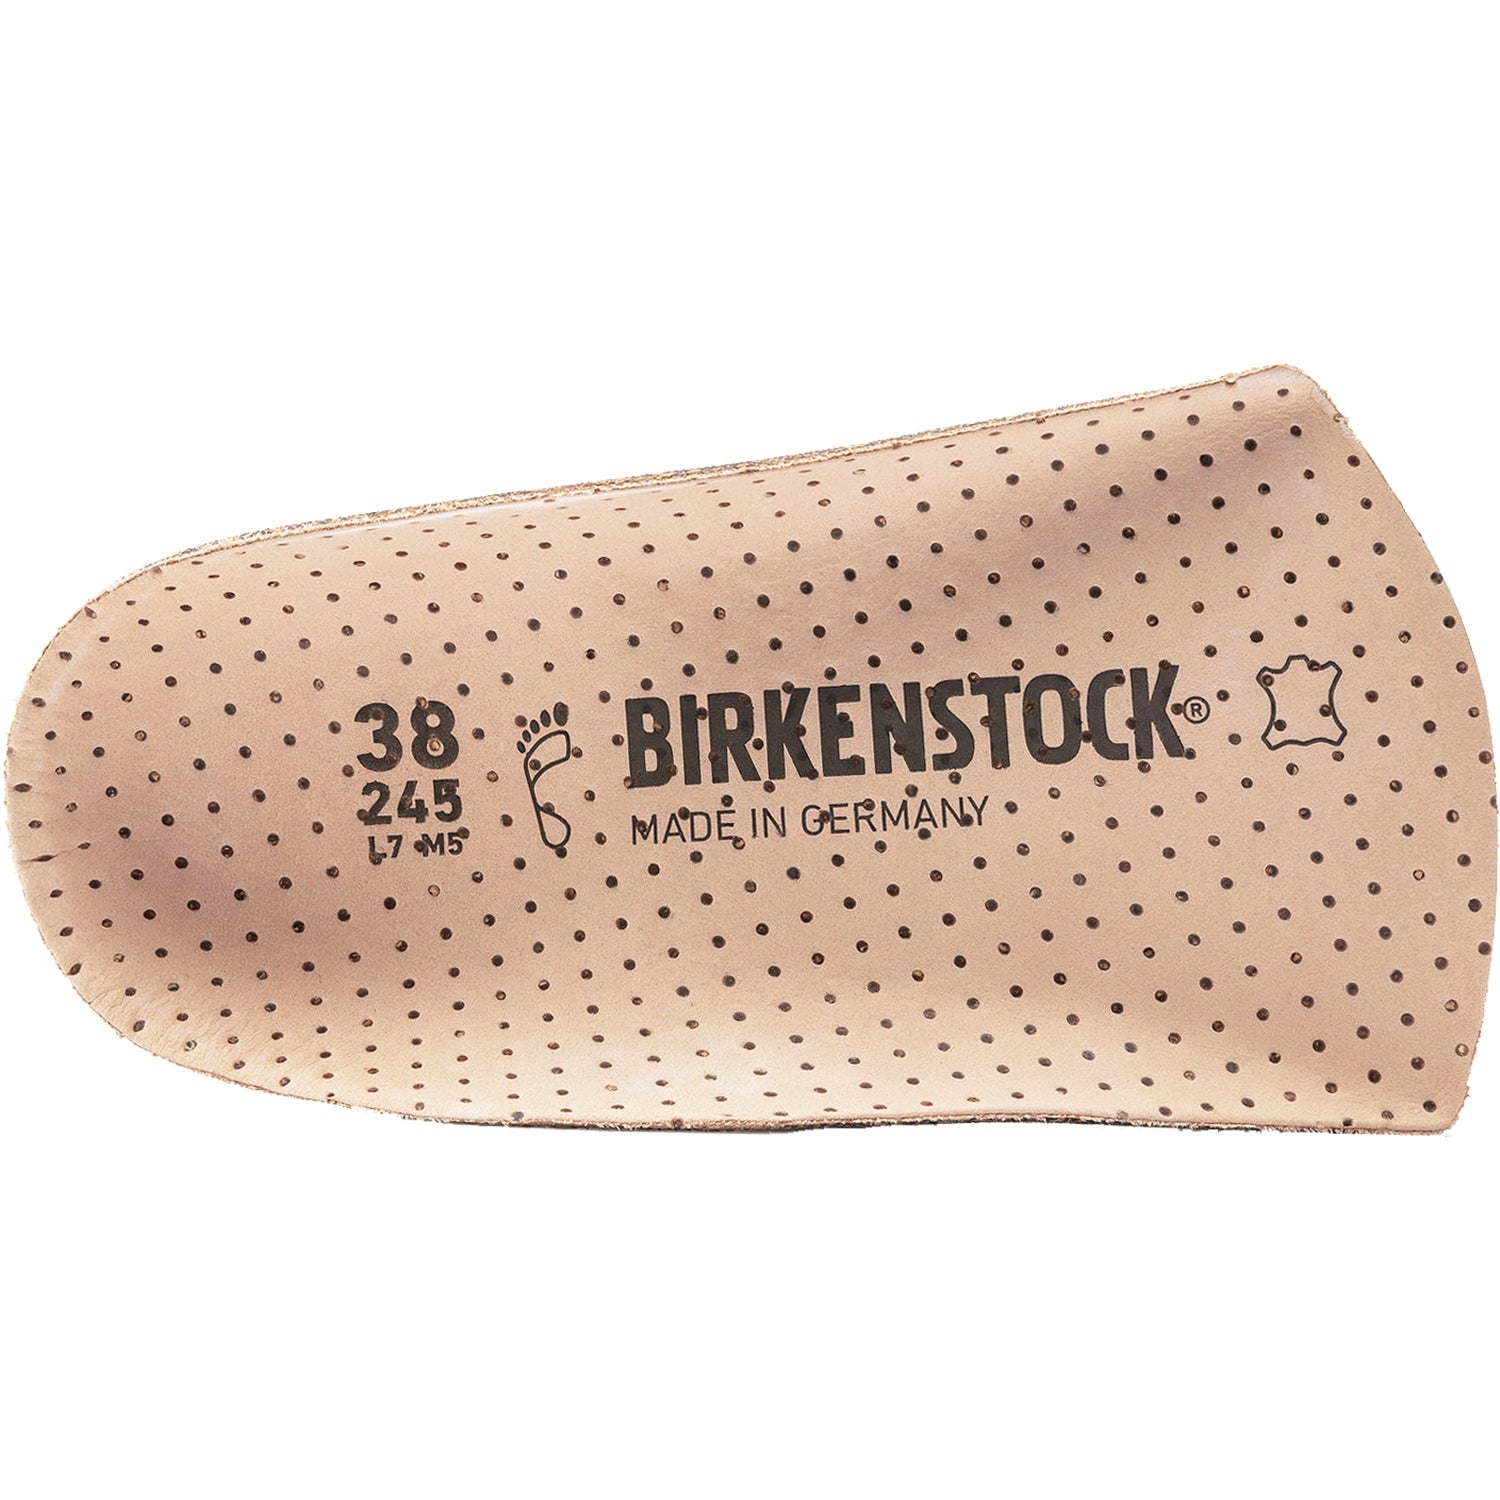 Birkenstock Birko Balance Arch Support Natural | Insoles – Footwear